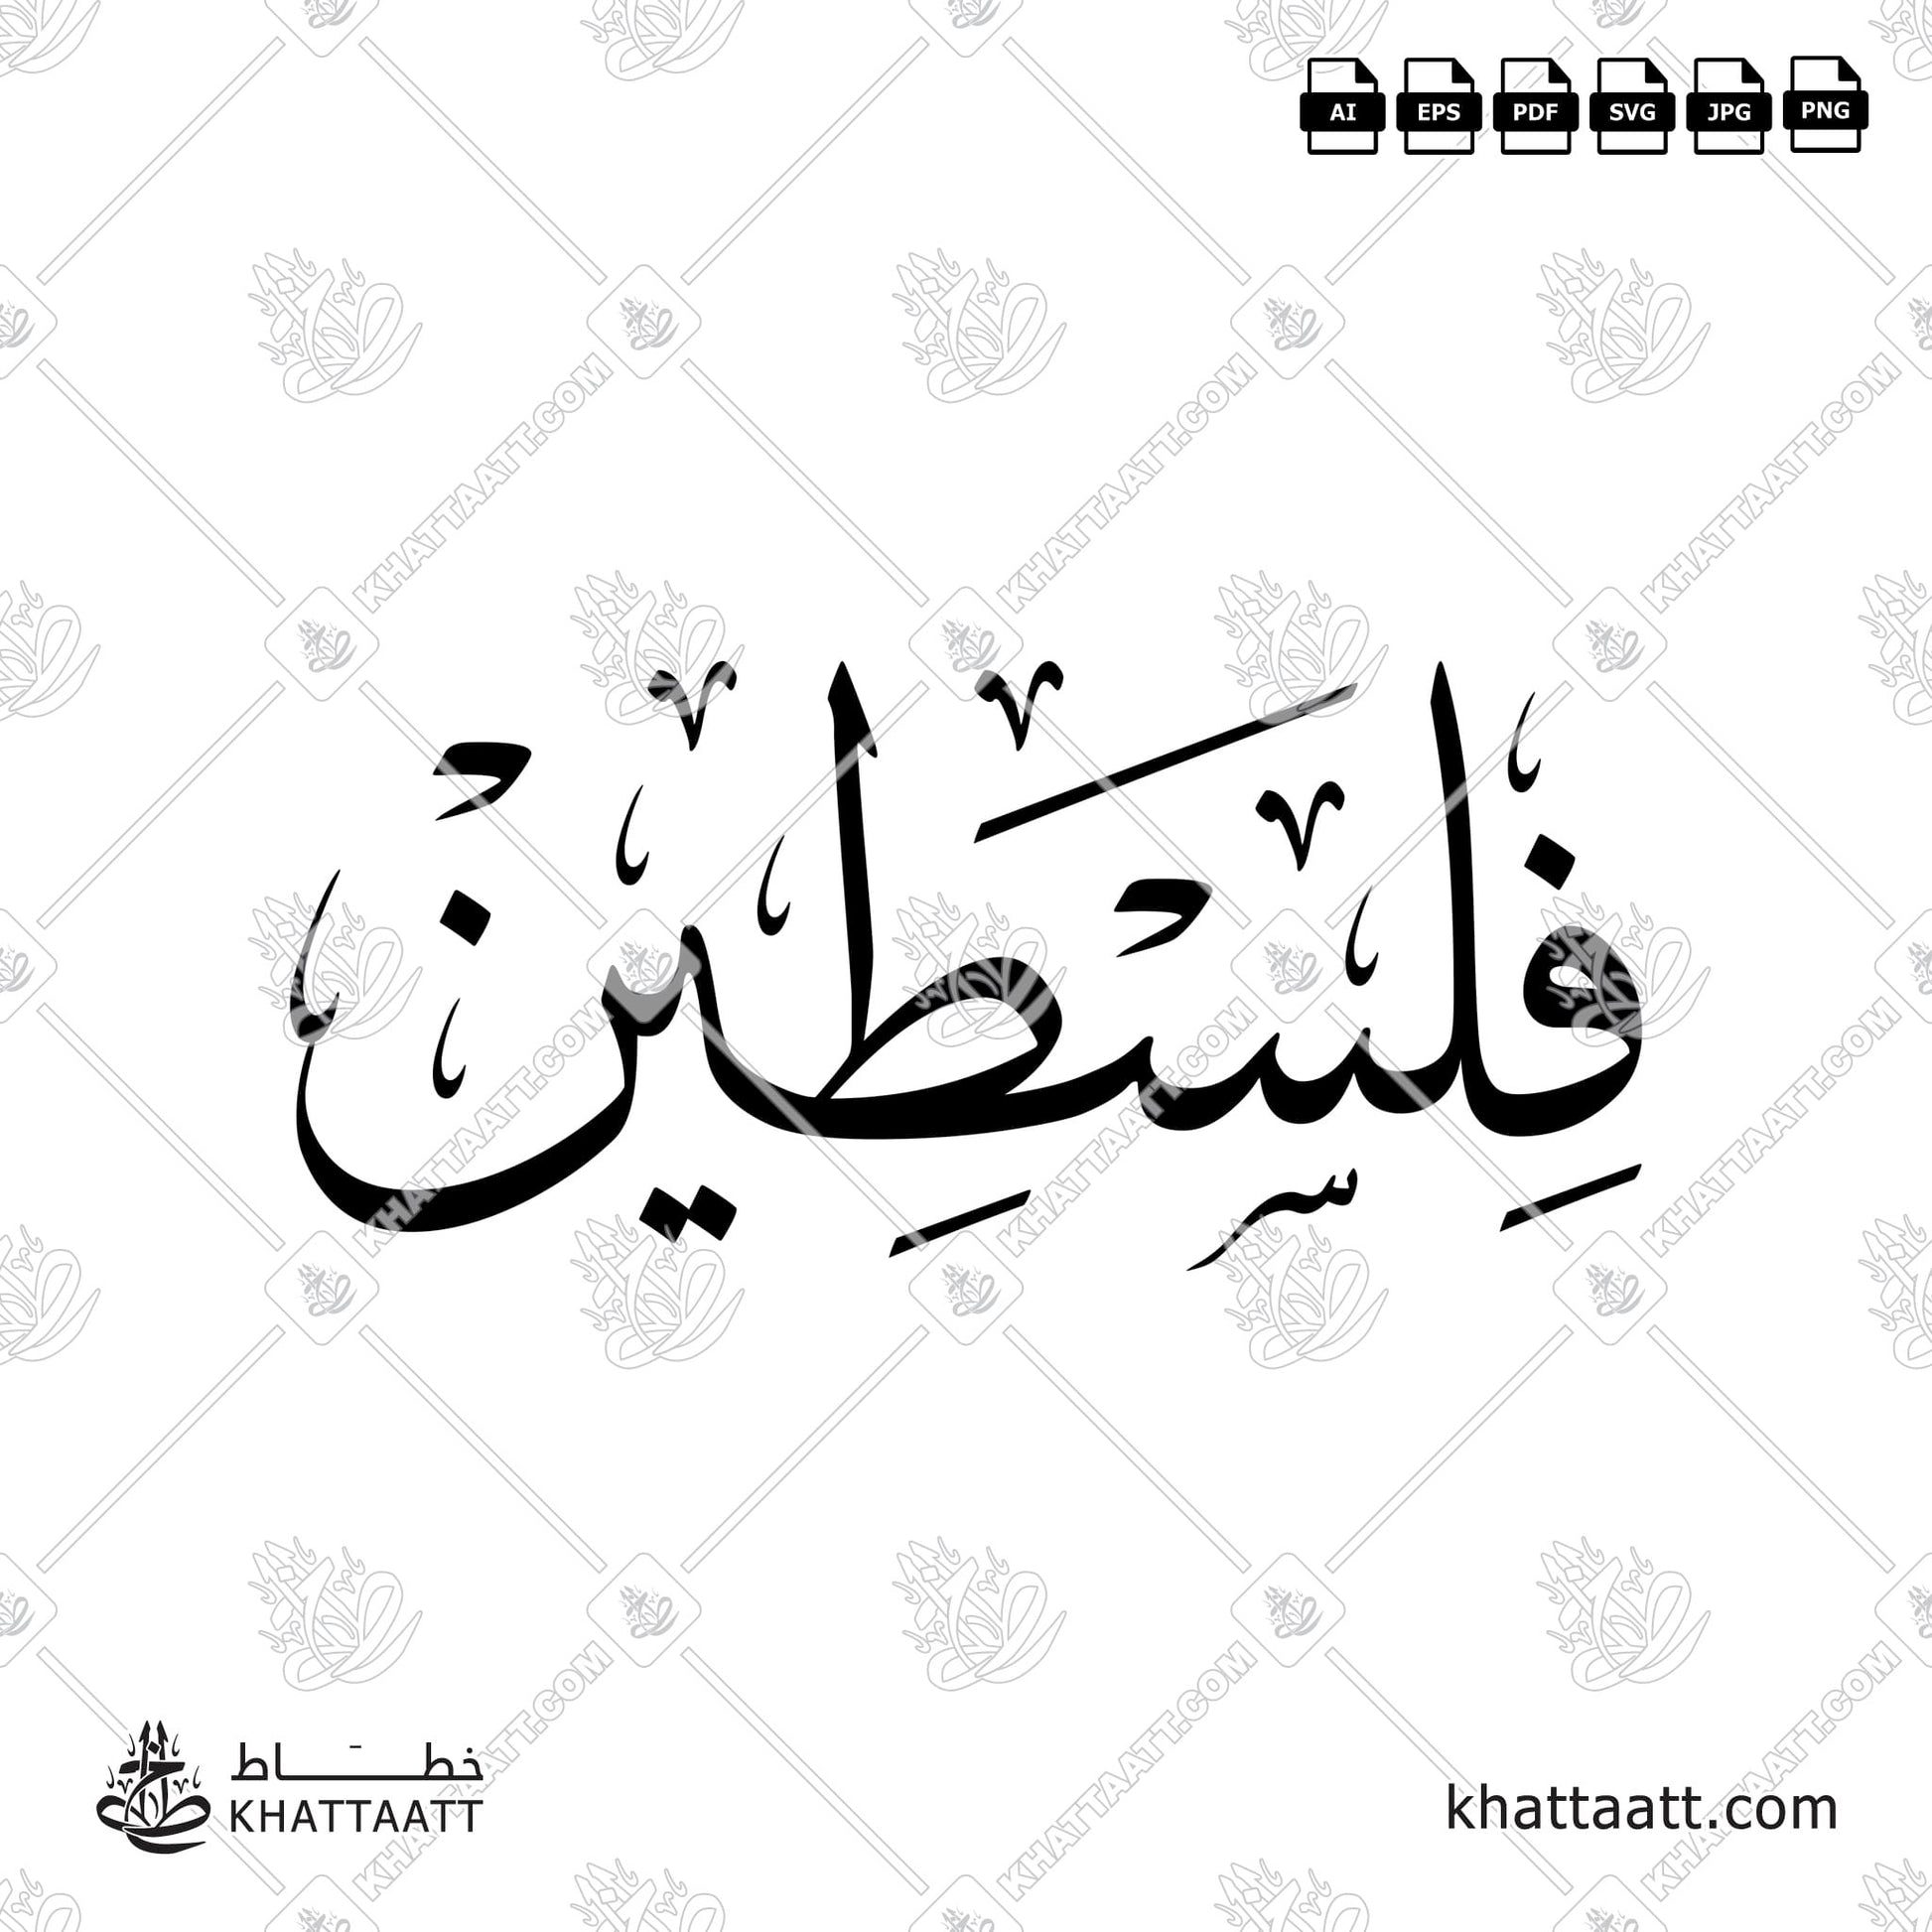 Download Arabic calligraphy تحميل مخطوطة خط عربي of Palestine - فلسطين (T011) Thuluth - خط الثلث in vector فيكتور and png